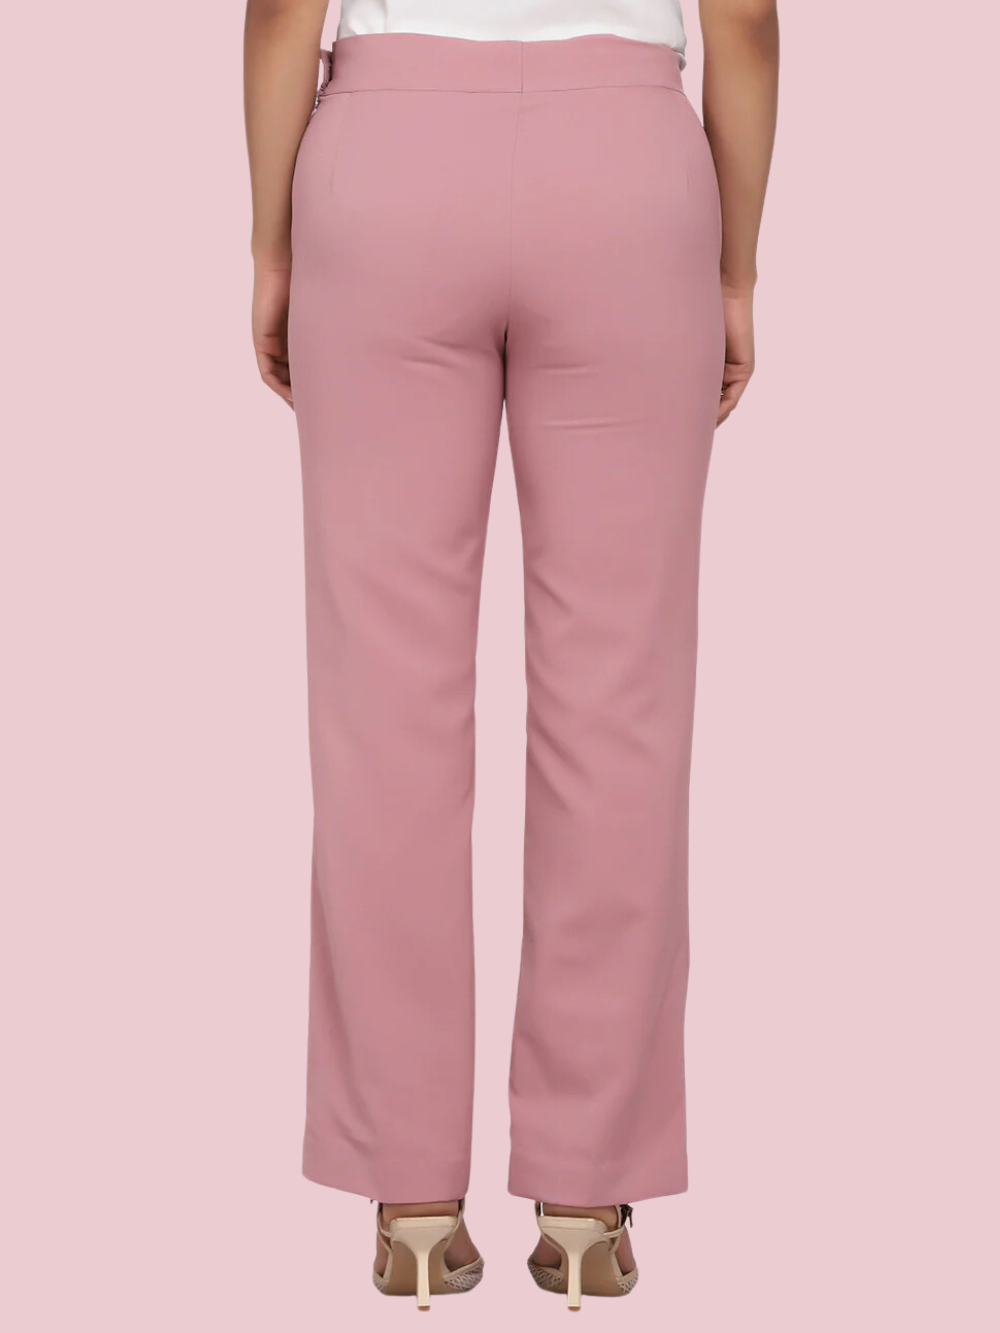 Poly Crepe Pink Trousers- Women's Office Wear